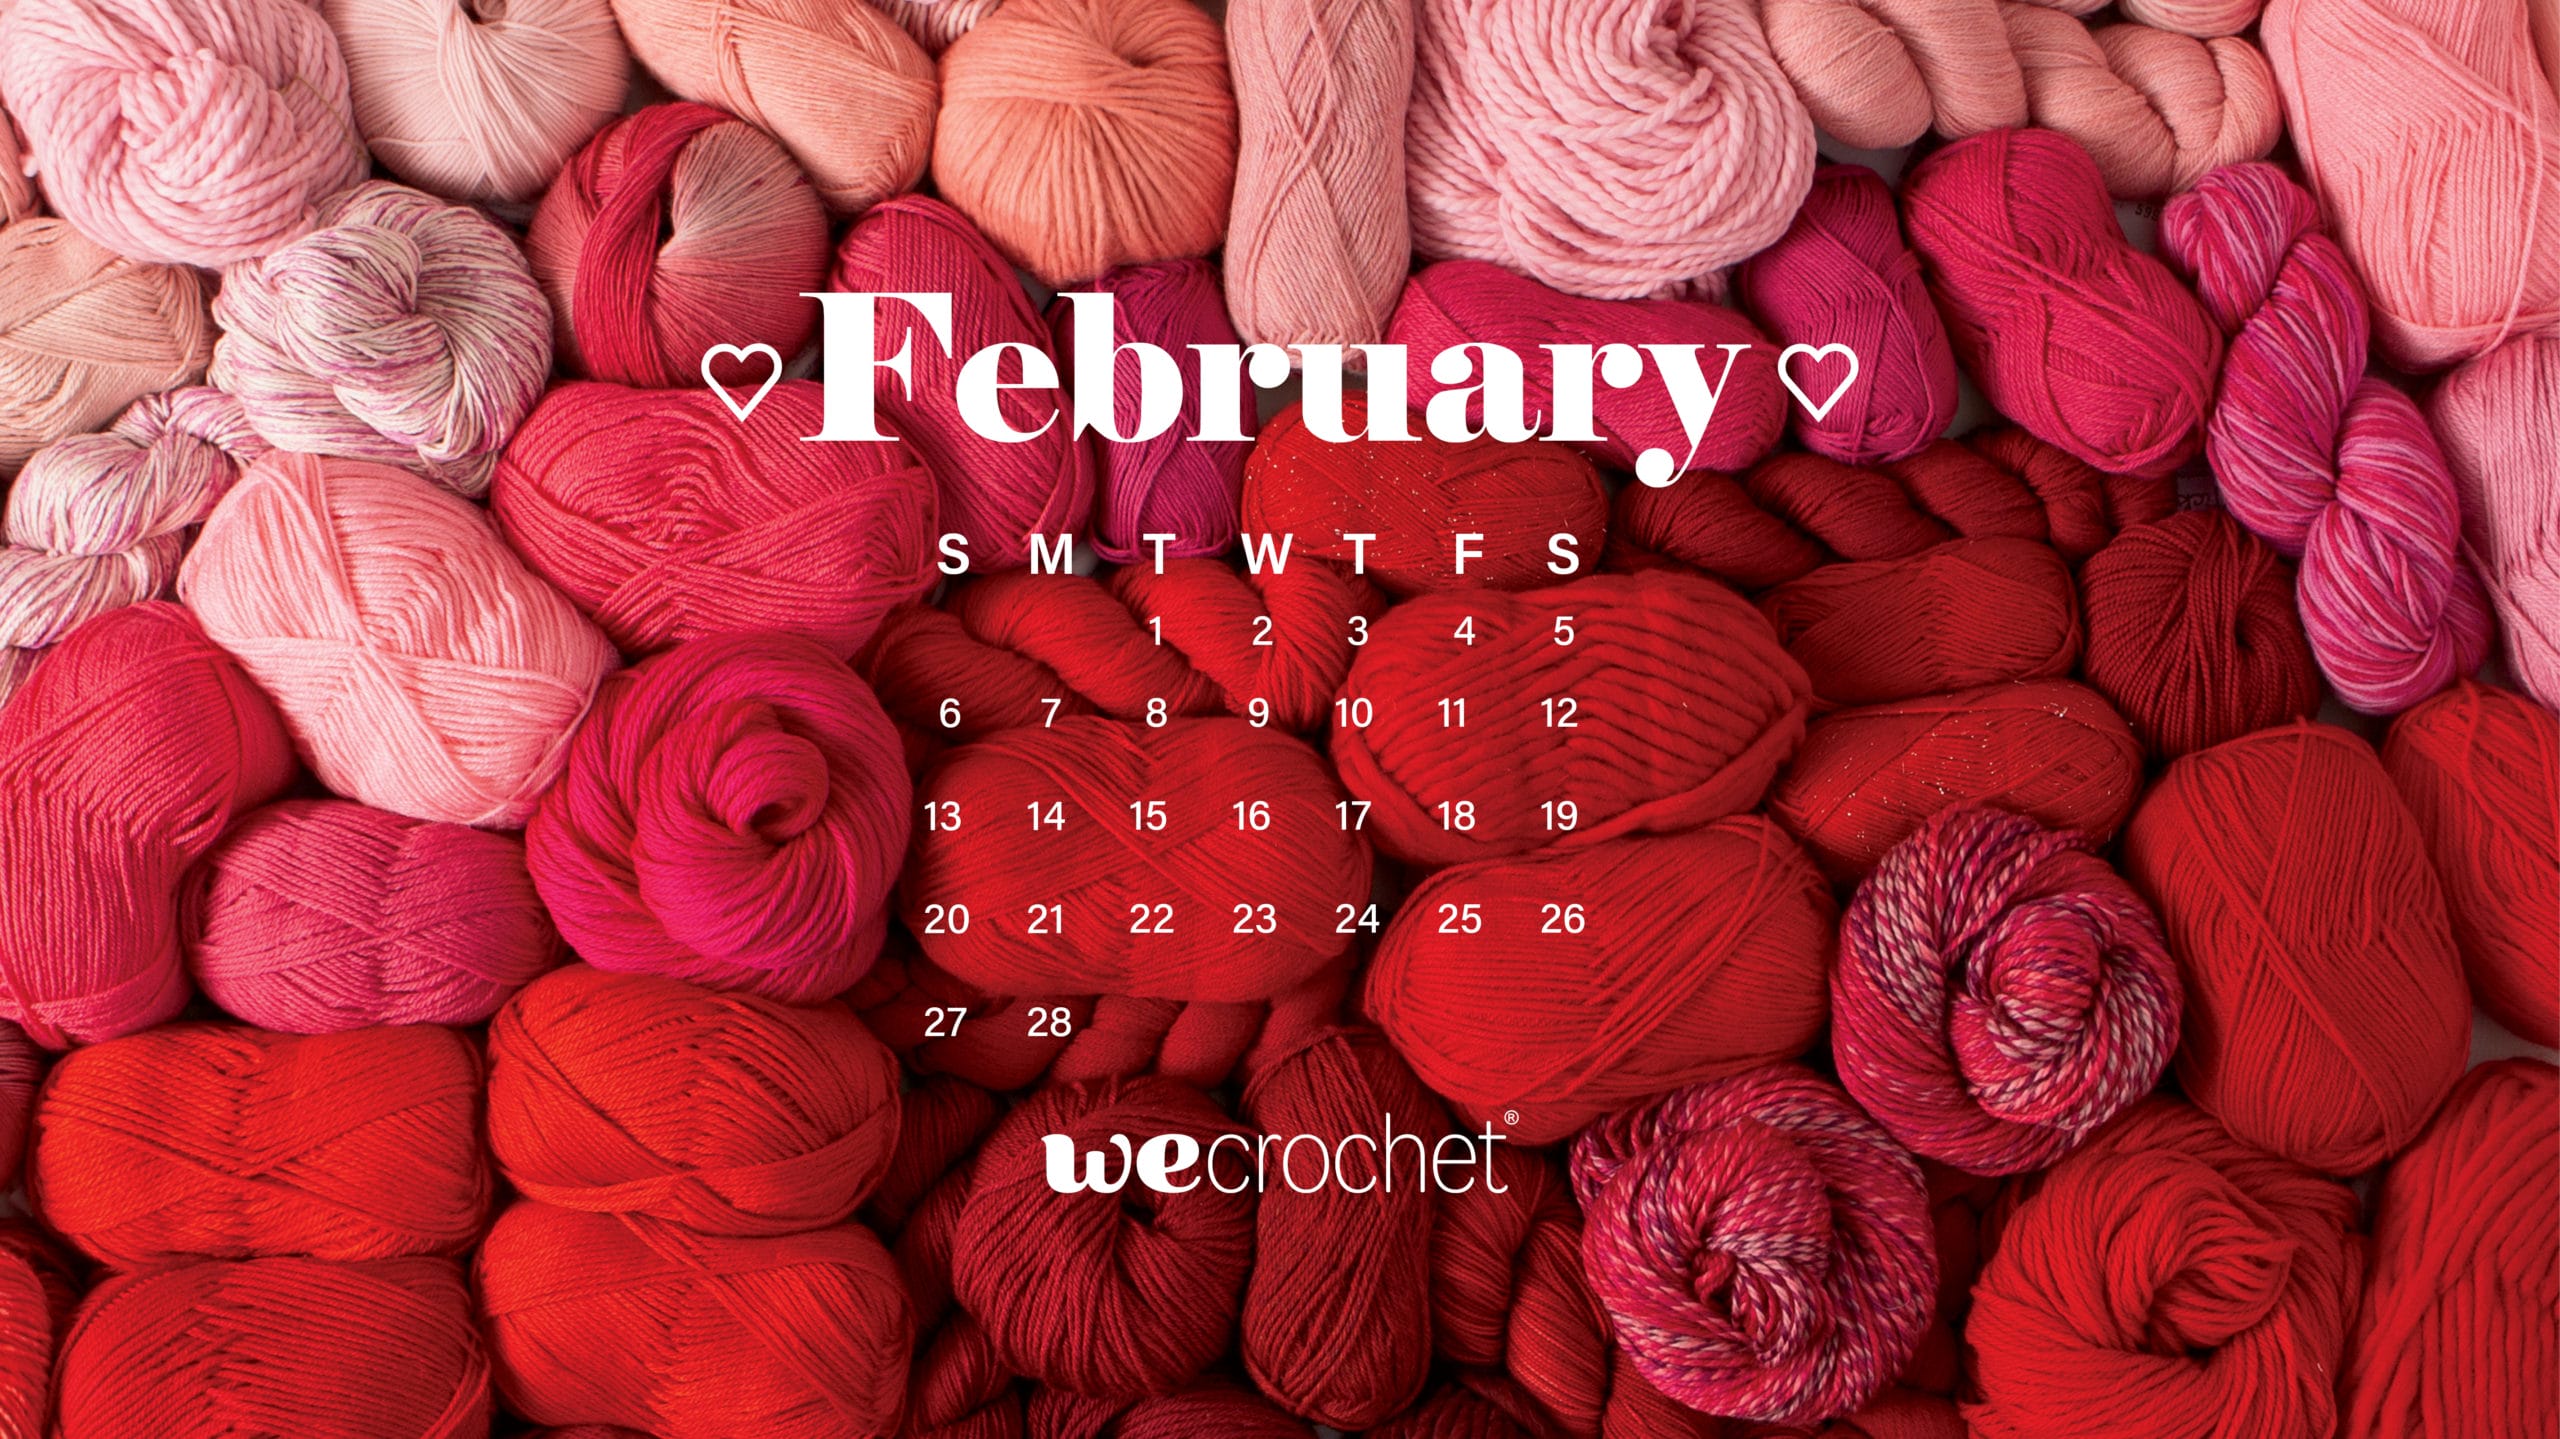 February 2022 Calendar Wallpaper Free Download: February 2022 Calendar Wallpaper - Wecrochet Staff Blog